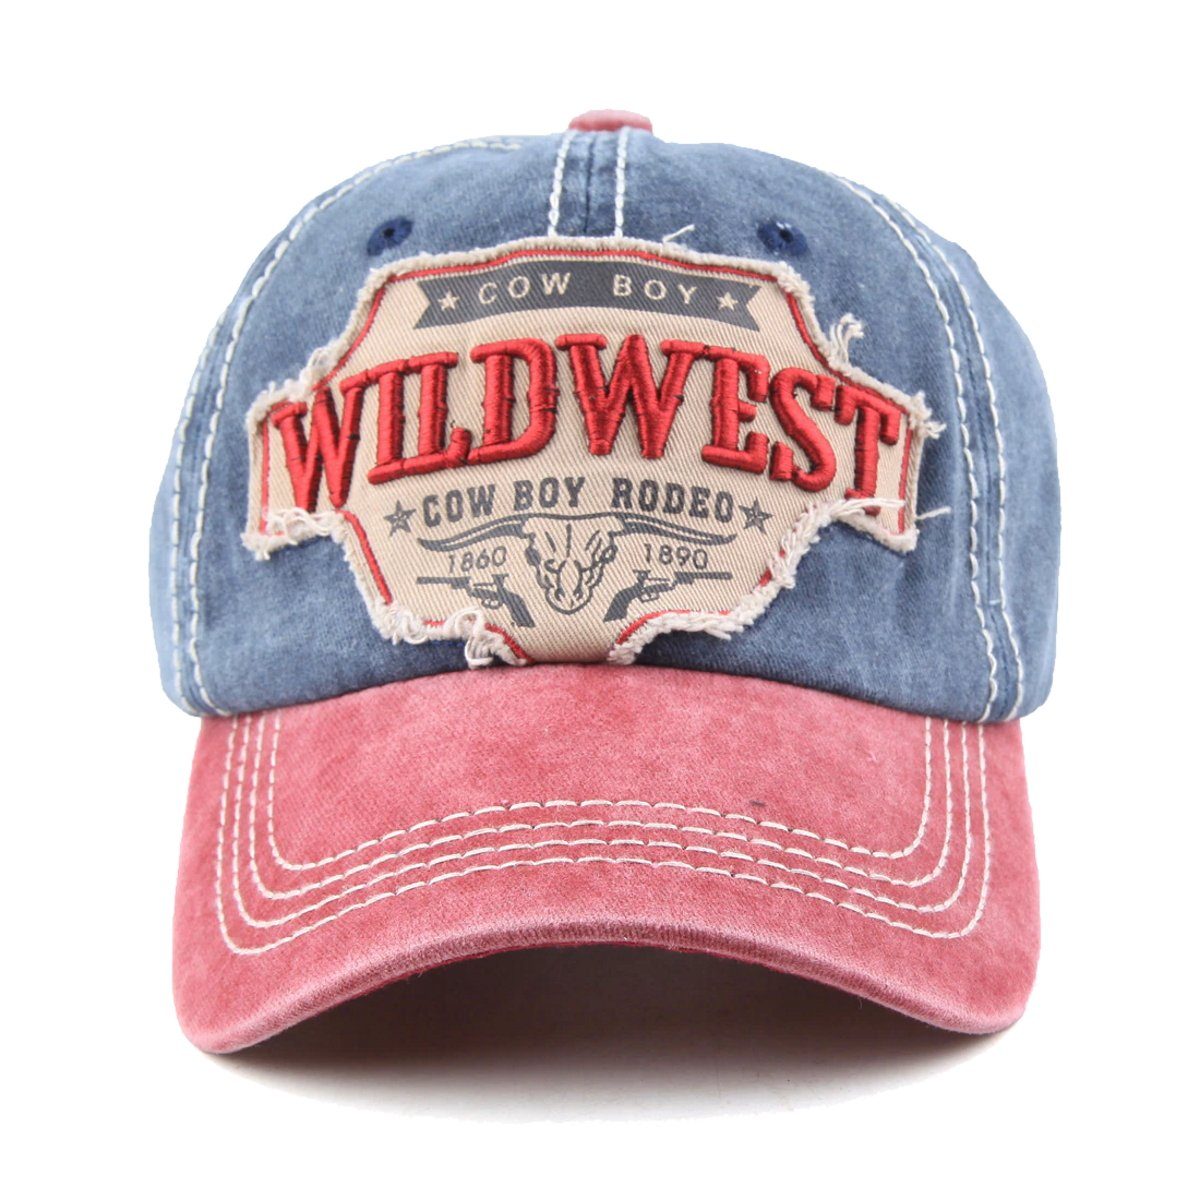 Sporty Baseball Cap Wildwest Western Retro Used Rodeo Look Cowboy Style Vintage Baseballcap Washed Rot/Navy Original